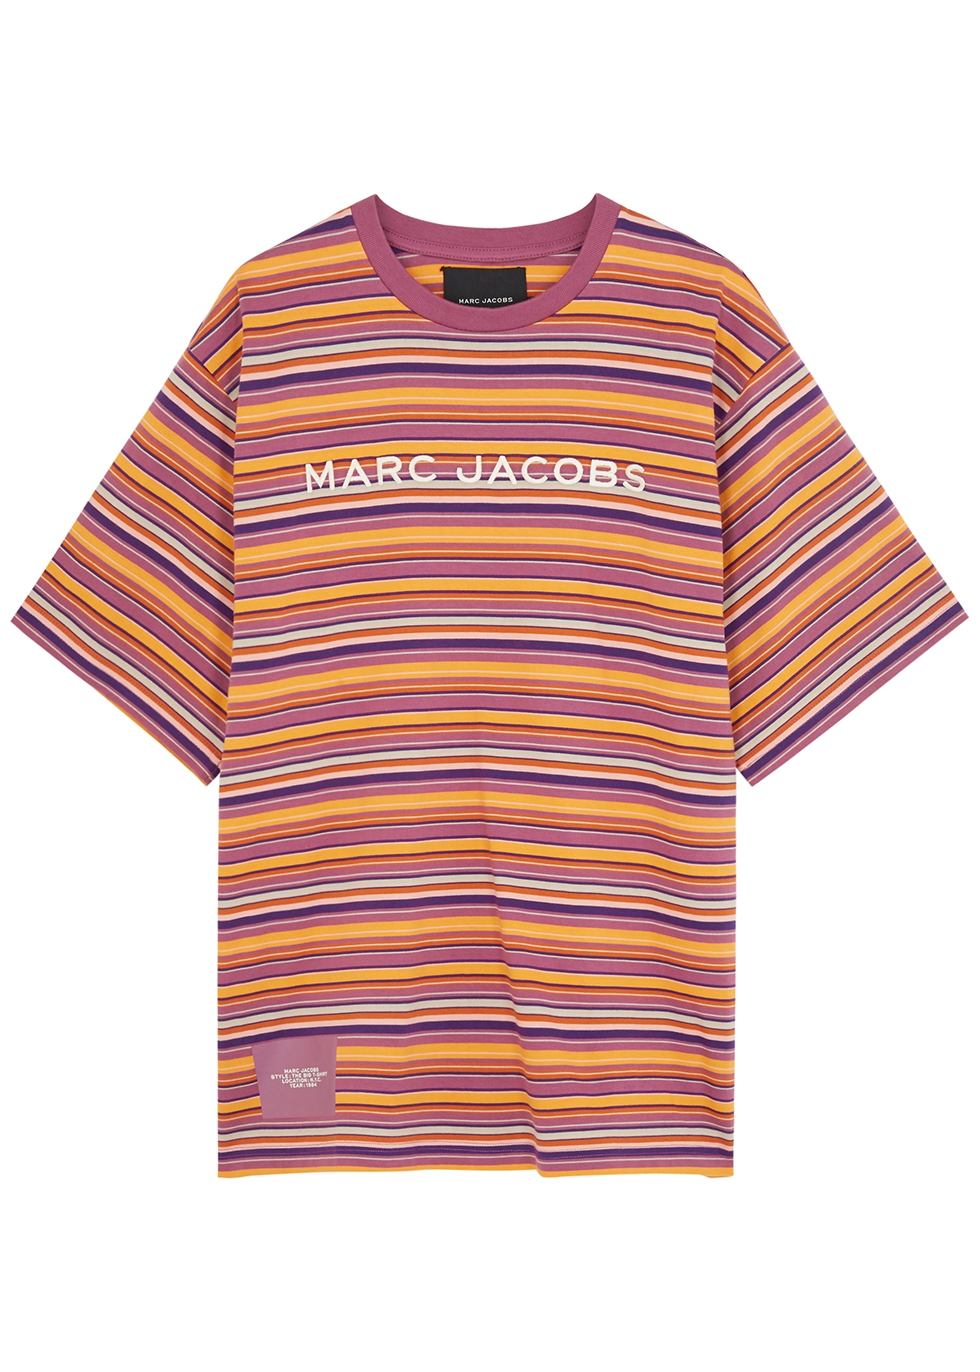 MARC JACOBS The Big T-shirt striped logo cotton top